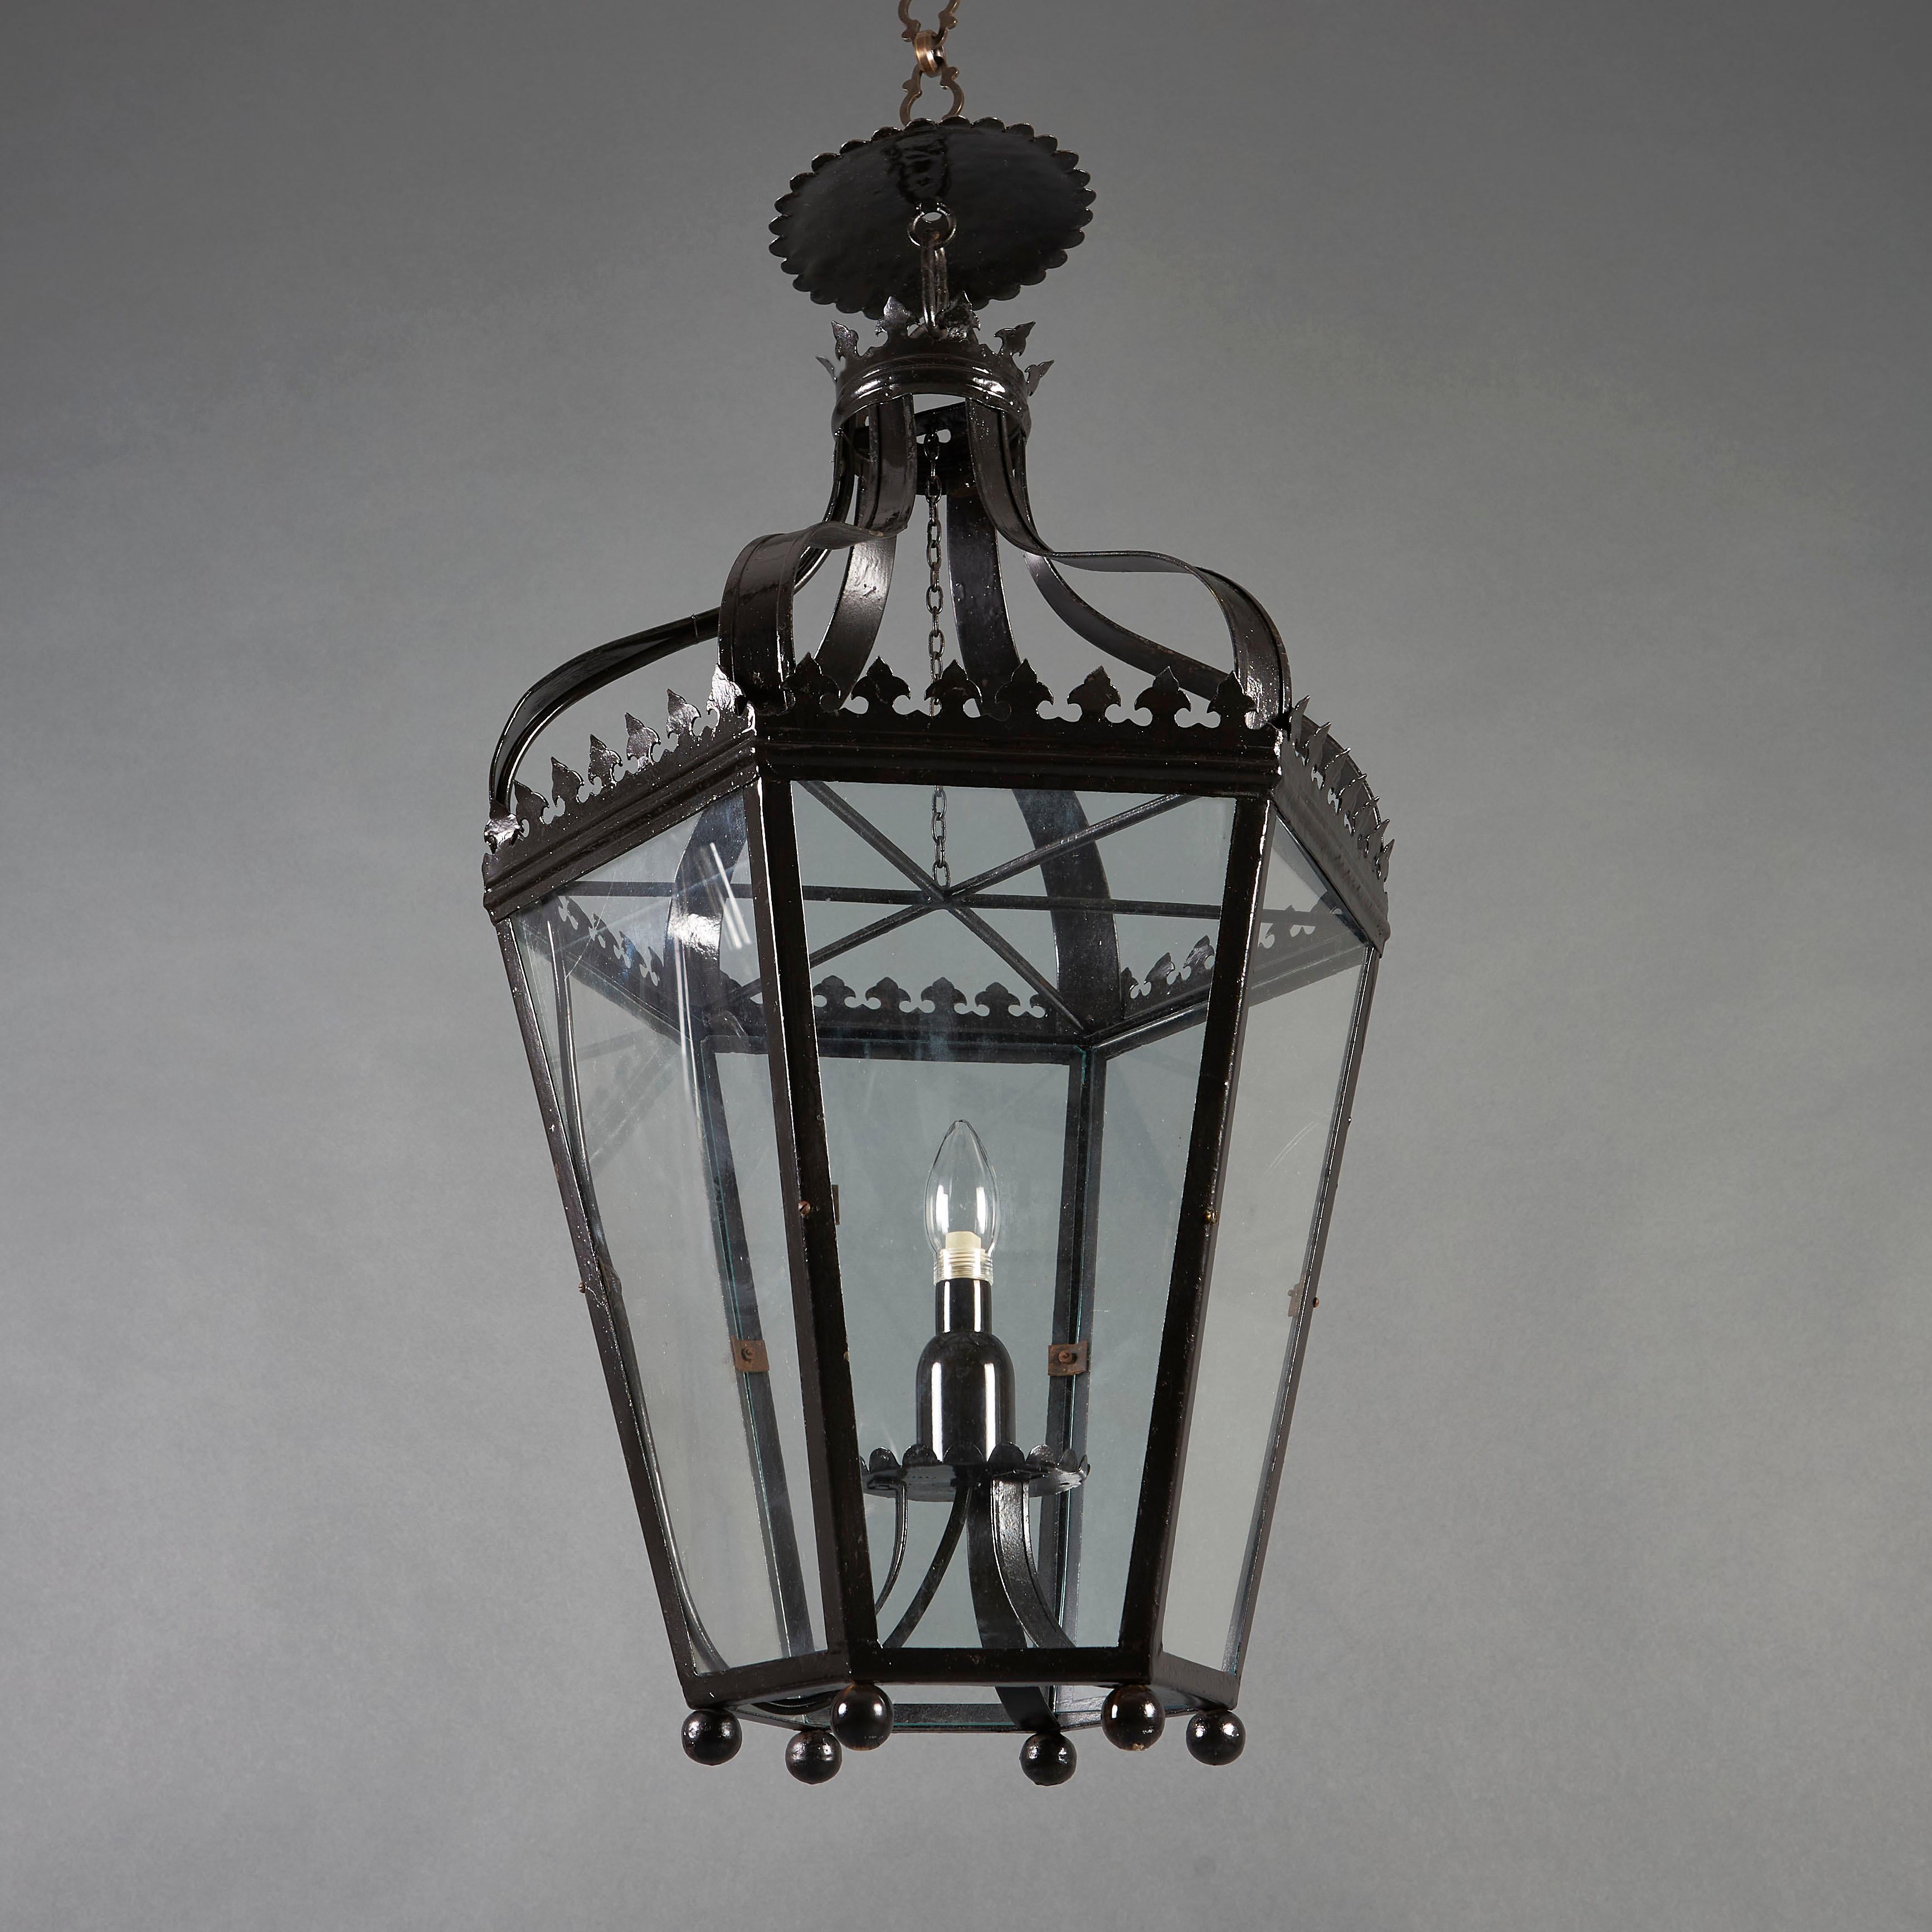 Gothic Revival Large 19th Century Black Hanging Lantern